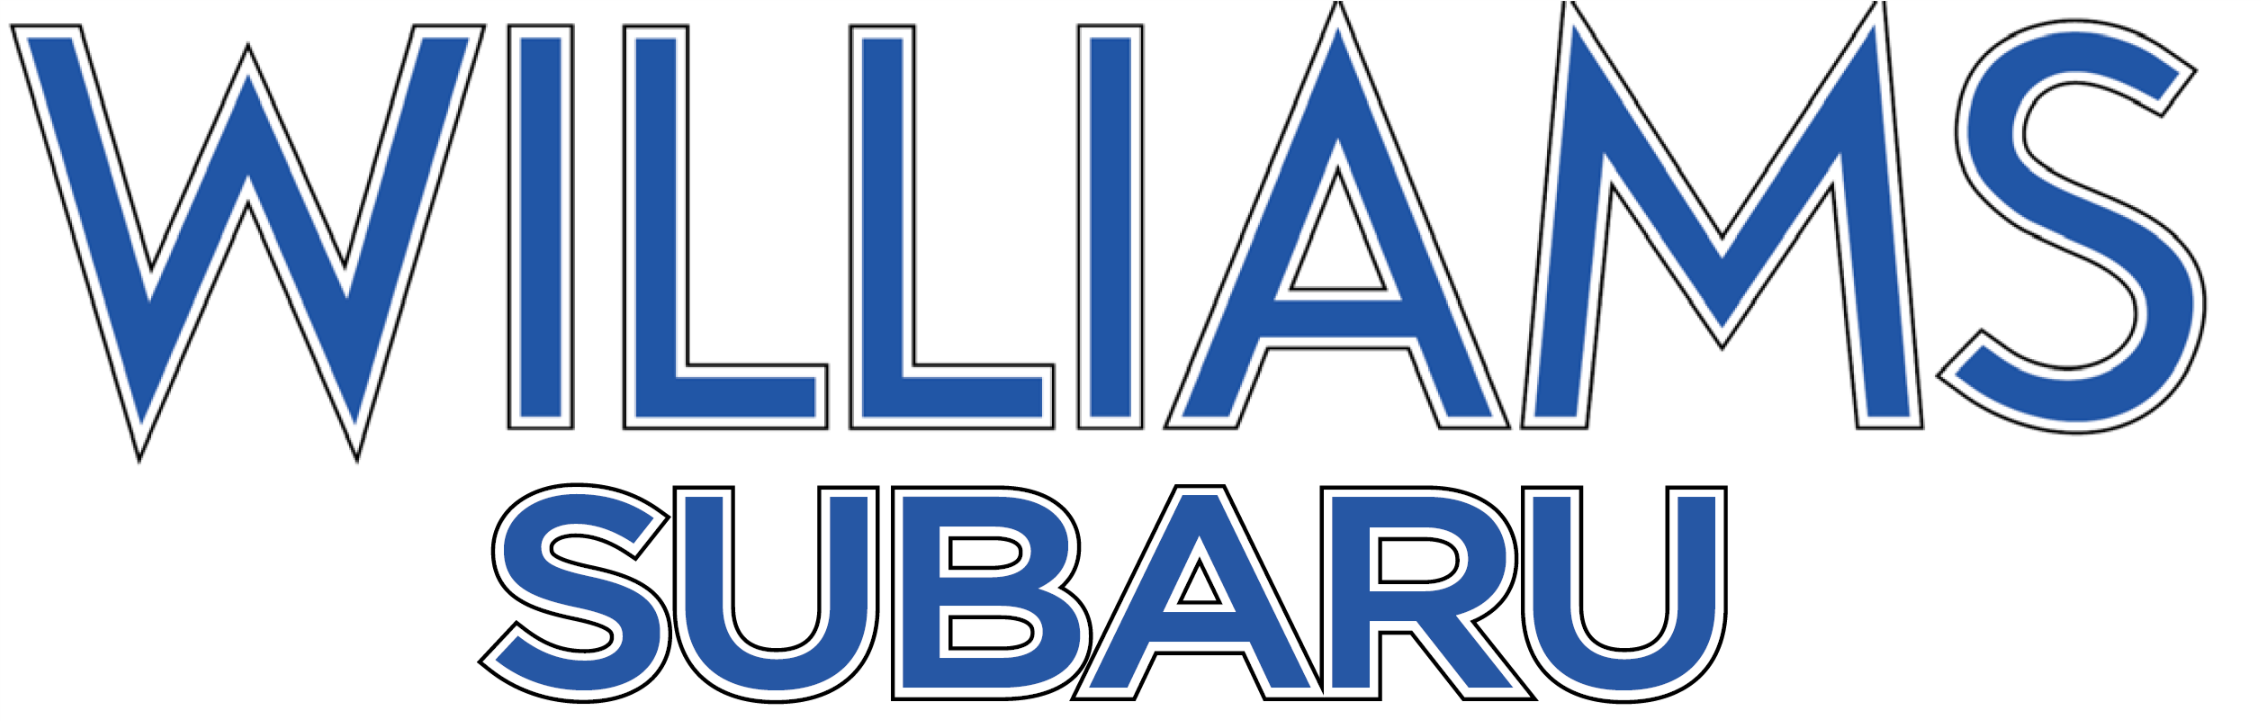 Williams Subaru_BIG